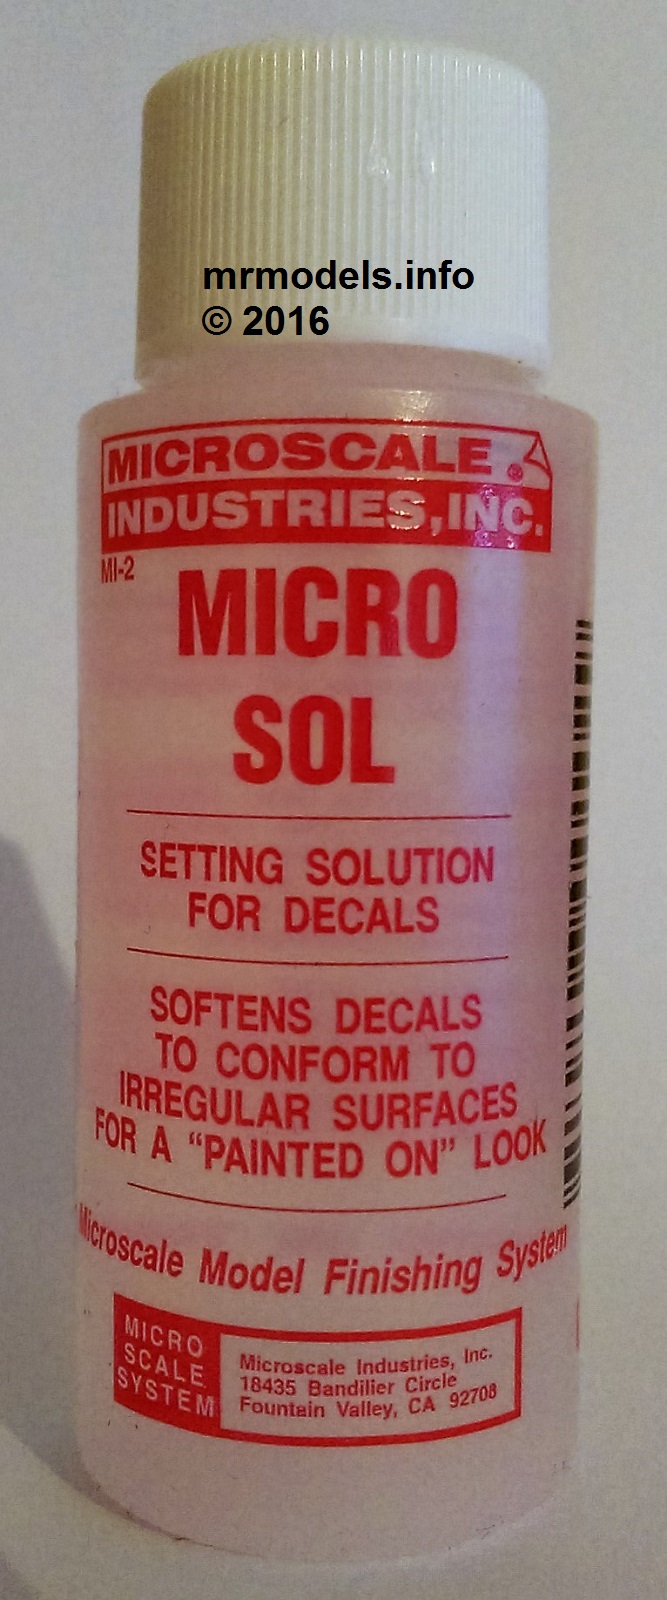 Microscale Sol